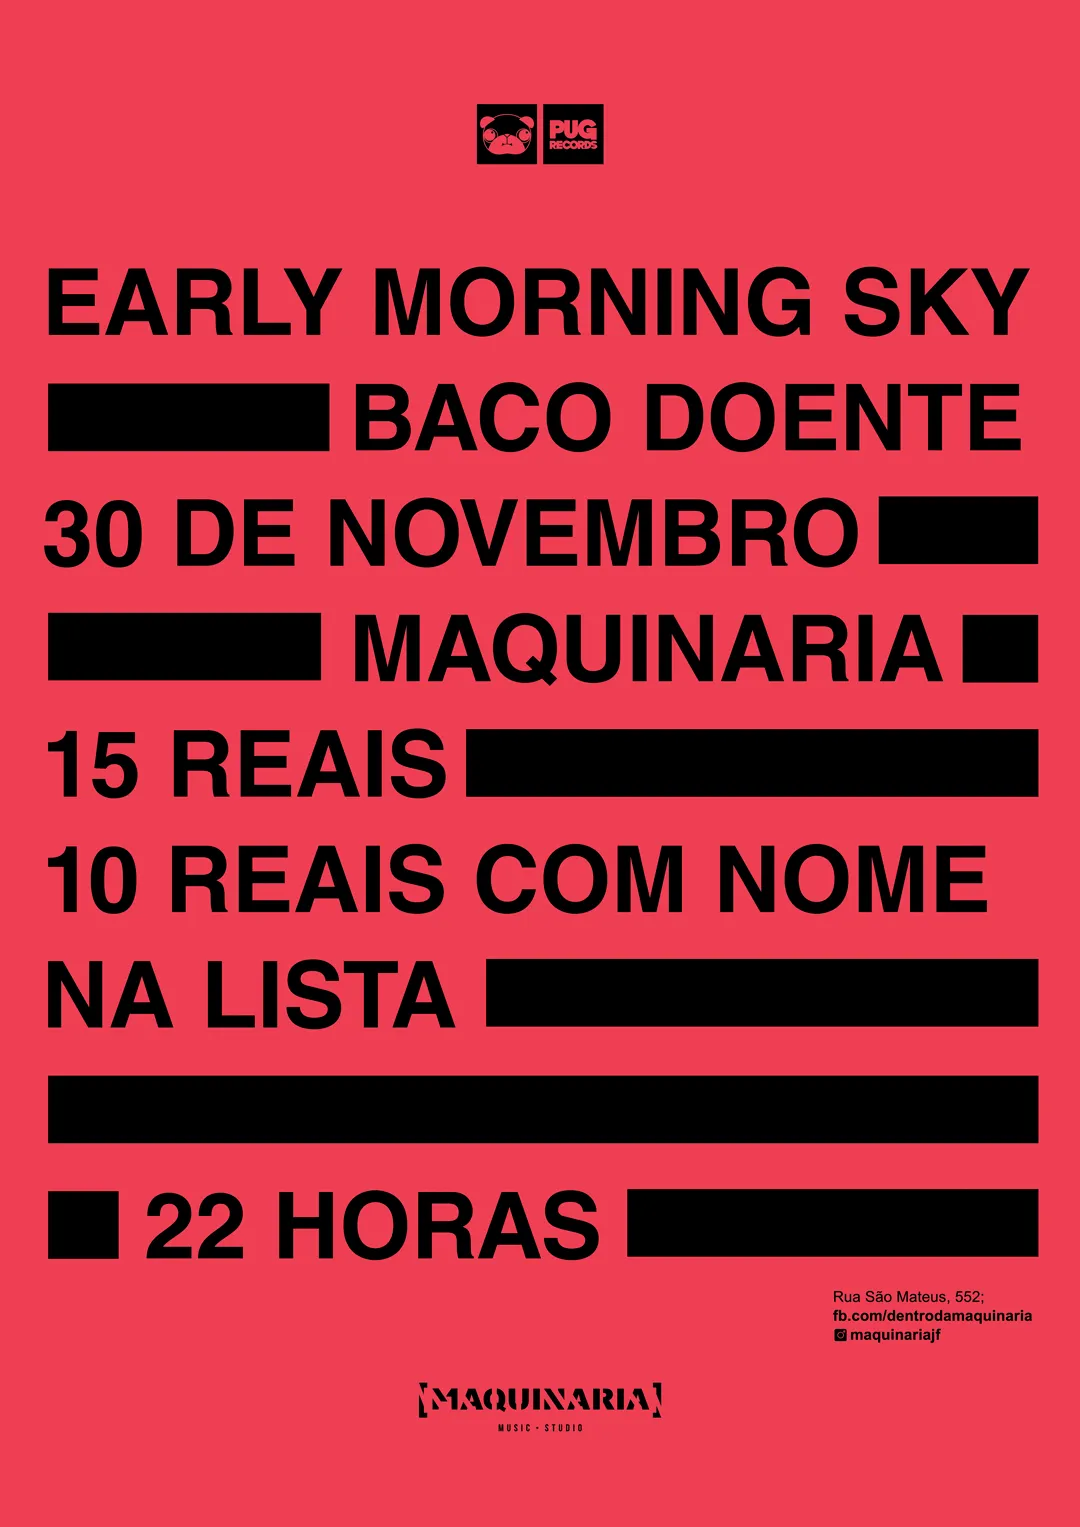 Pug Records: Early Morning Sky e Baco Doente - 30 de novembro - maquinaria - 15 reais - 10 reais com nome na lista - 22 horas